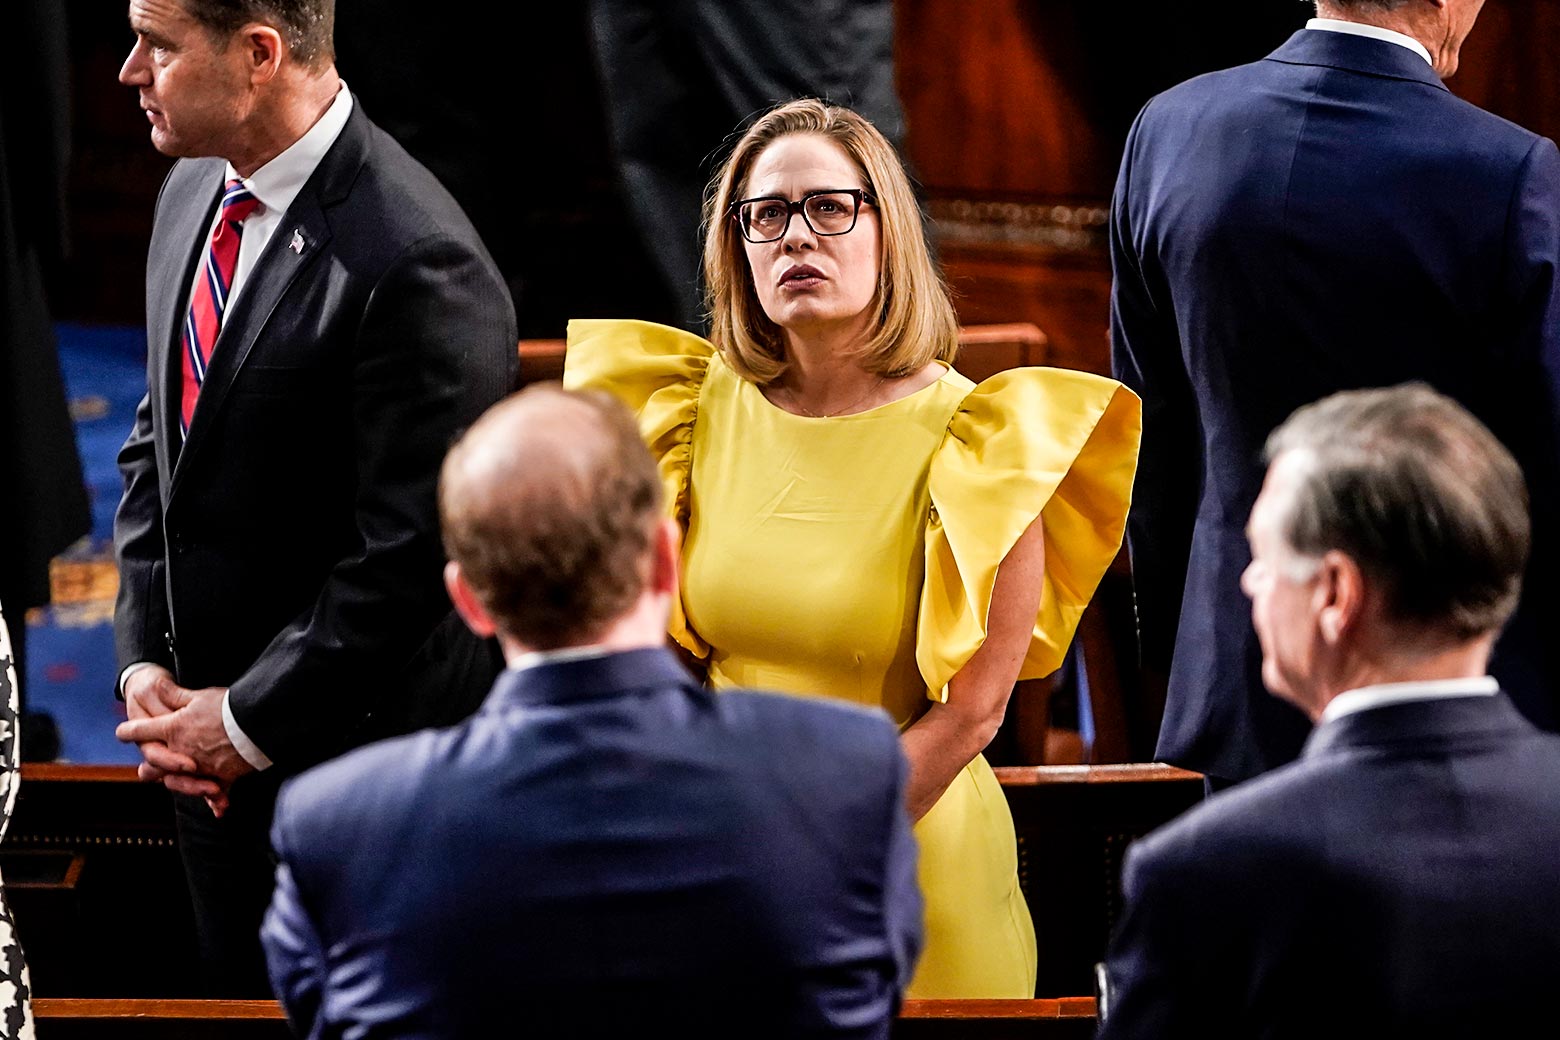 A woman in a loud, yellow dress.